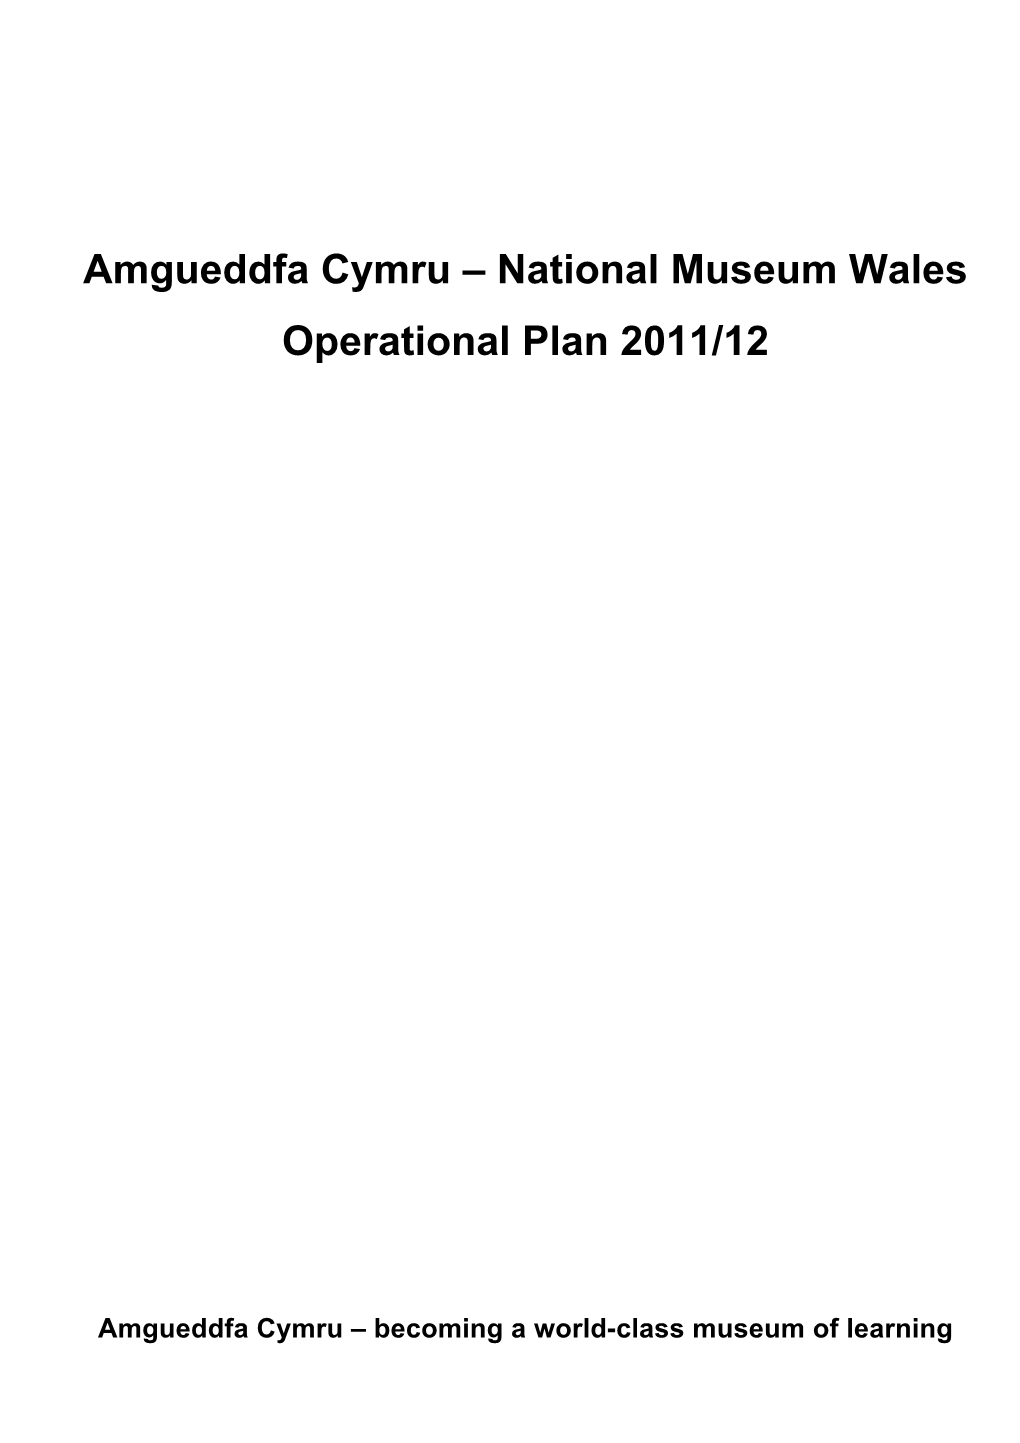 Amgueddfa Cymru – National Museum Wales Operational Plan 2011/12